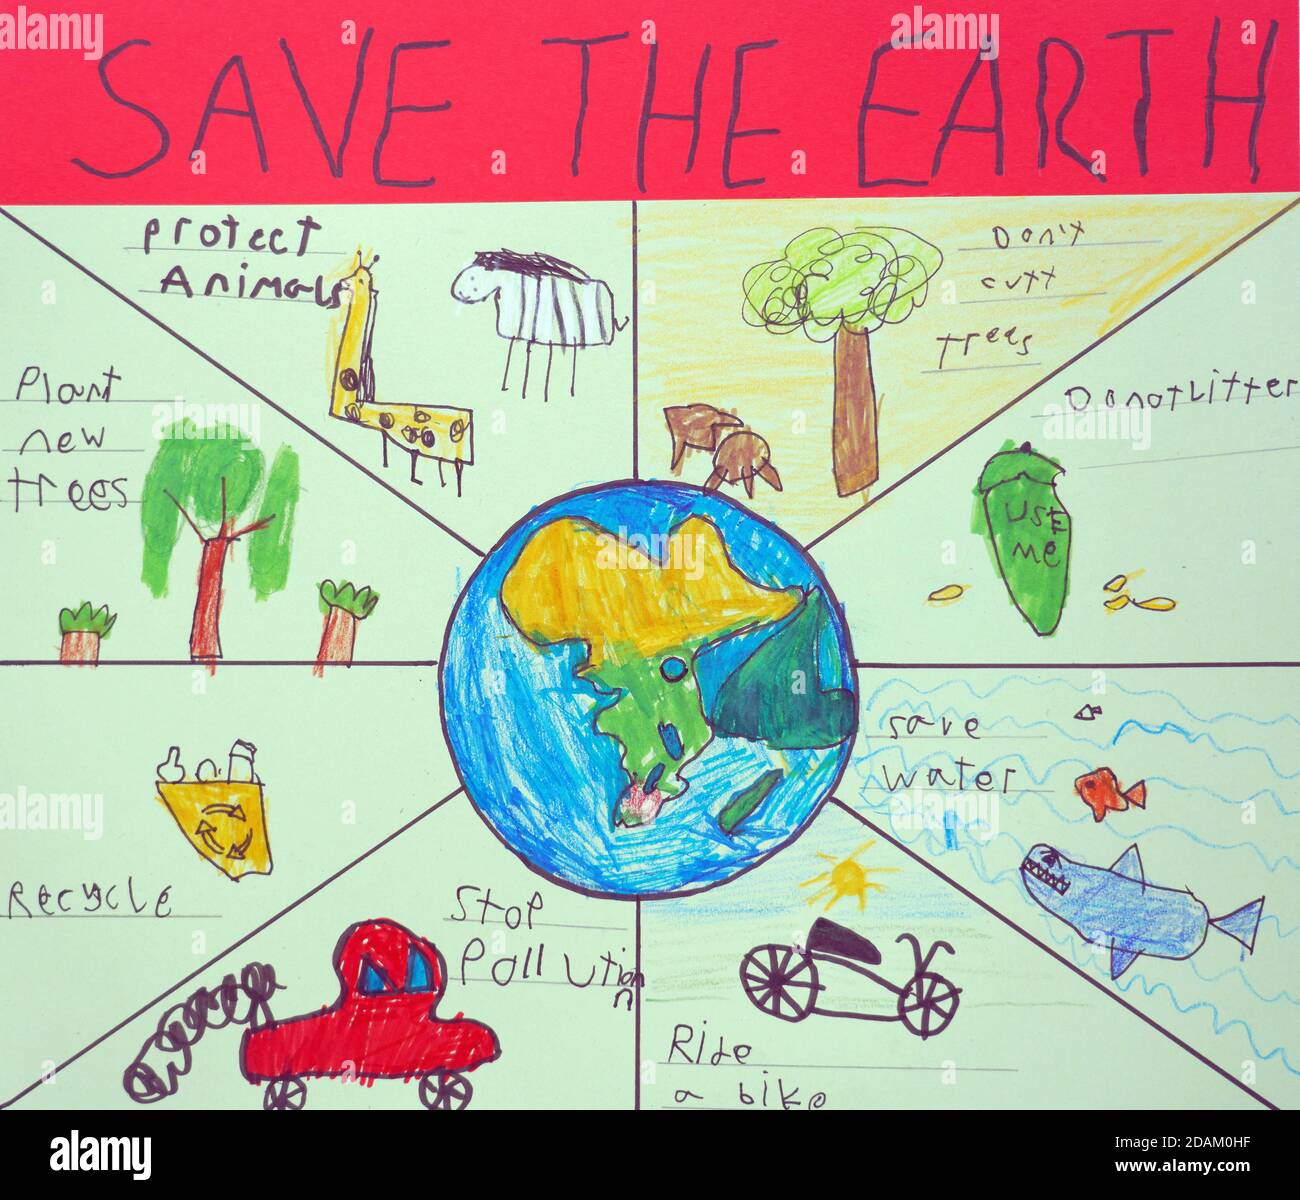 Share 158+ earth save drawing best - seven.edu.vn-saigonsouth.com.vn